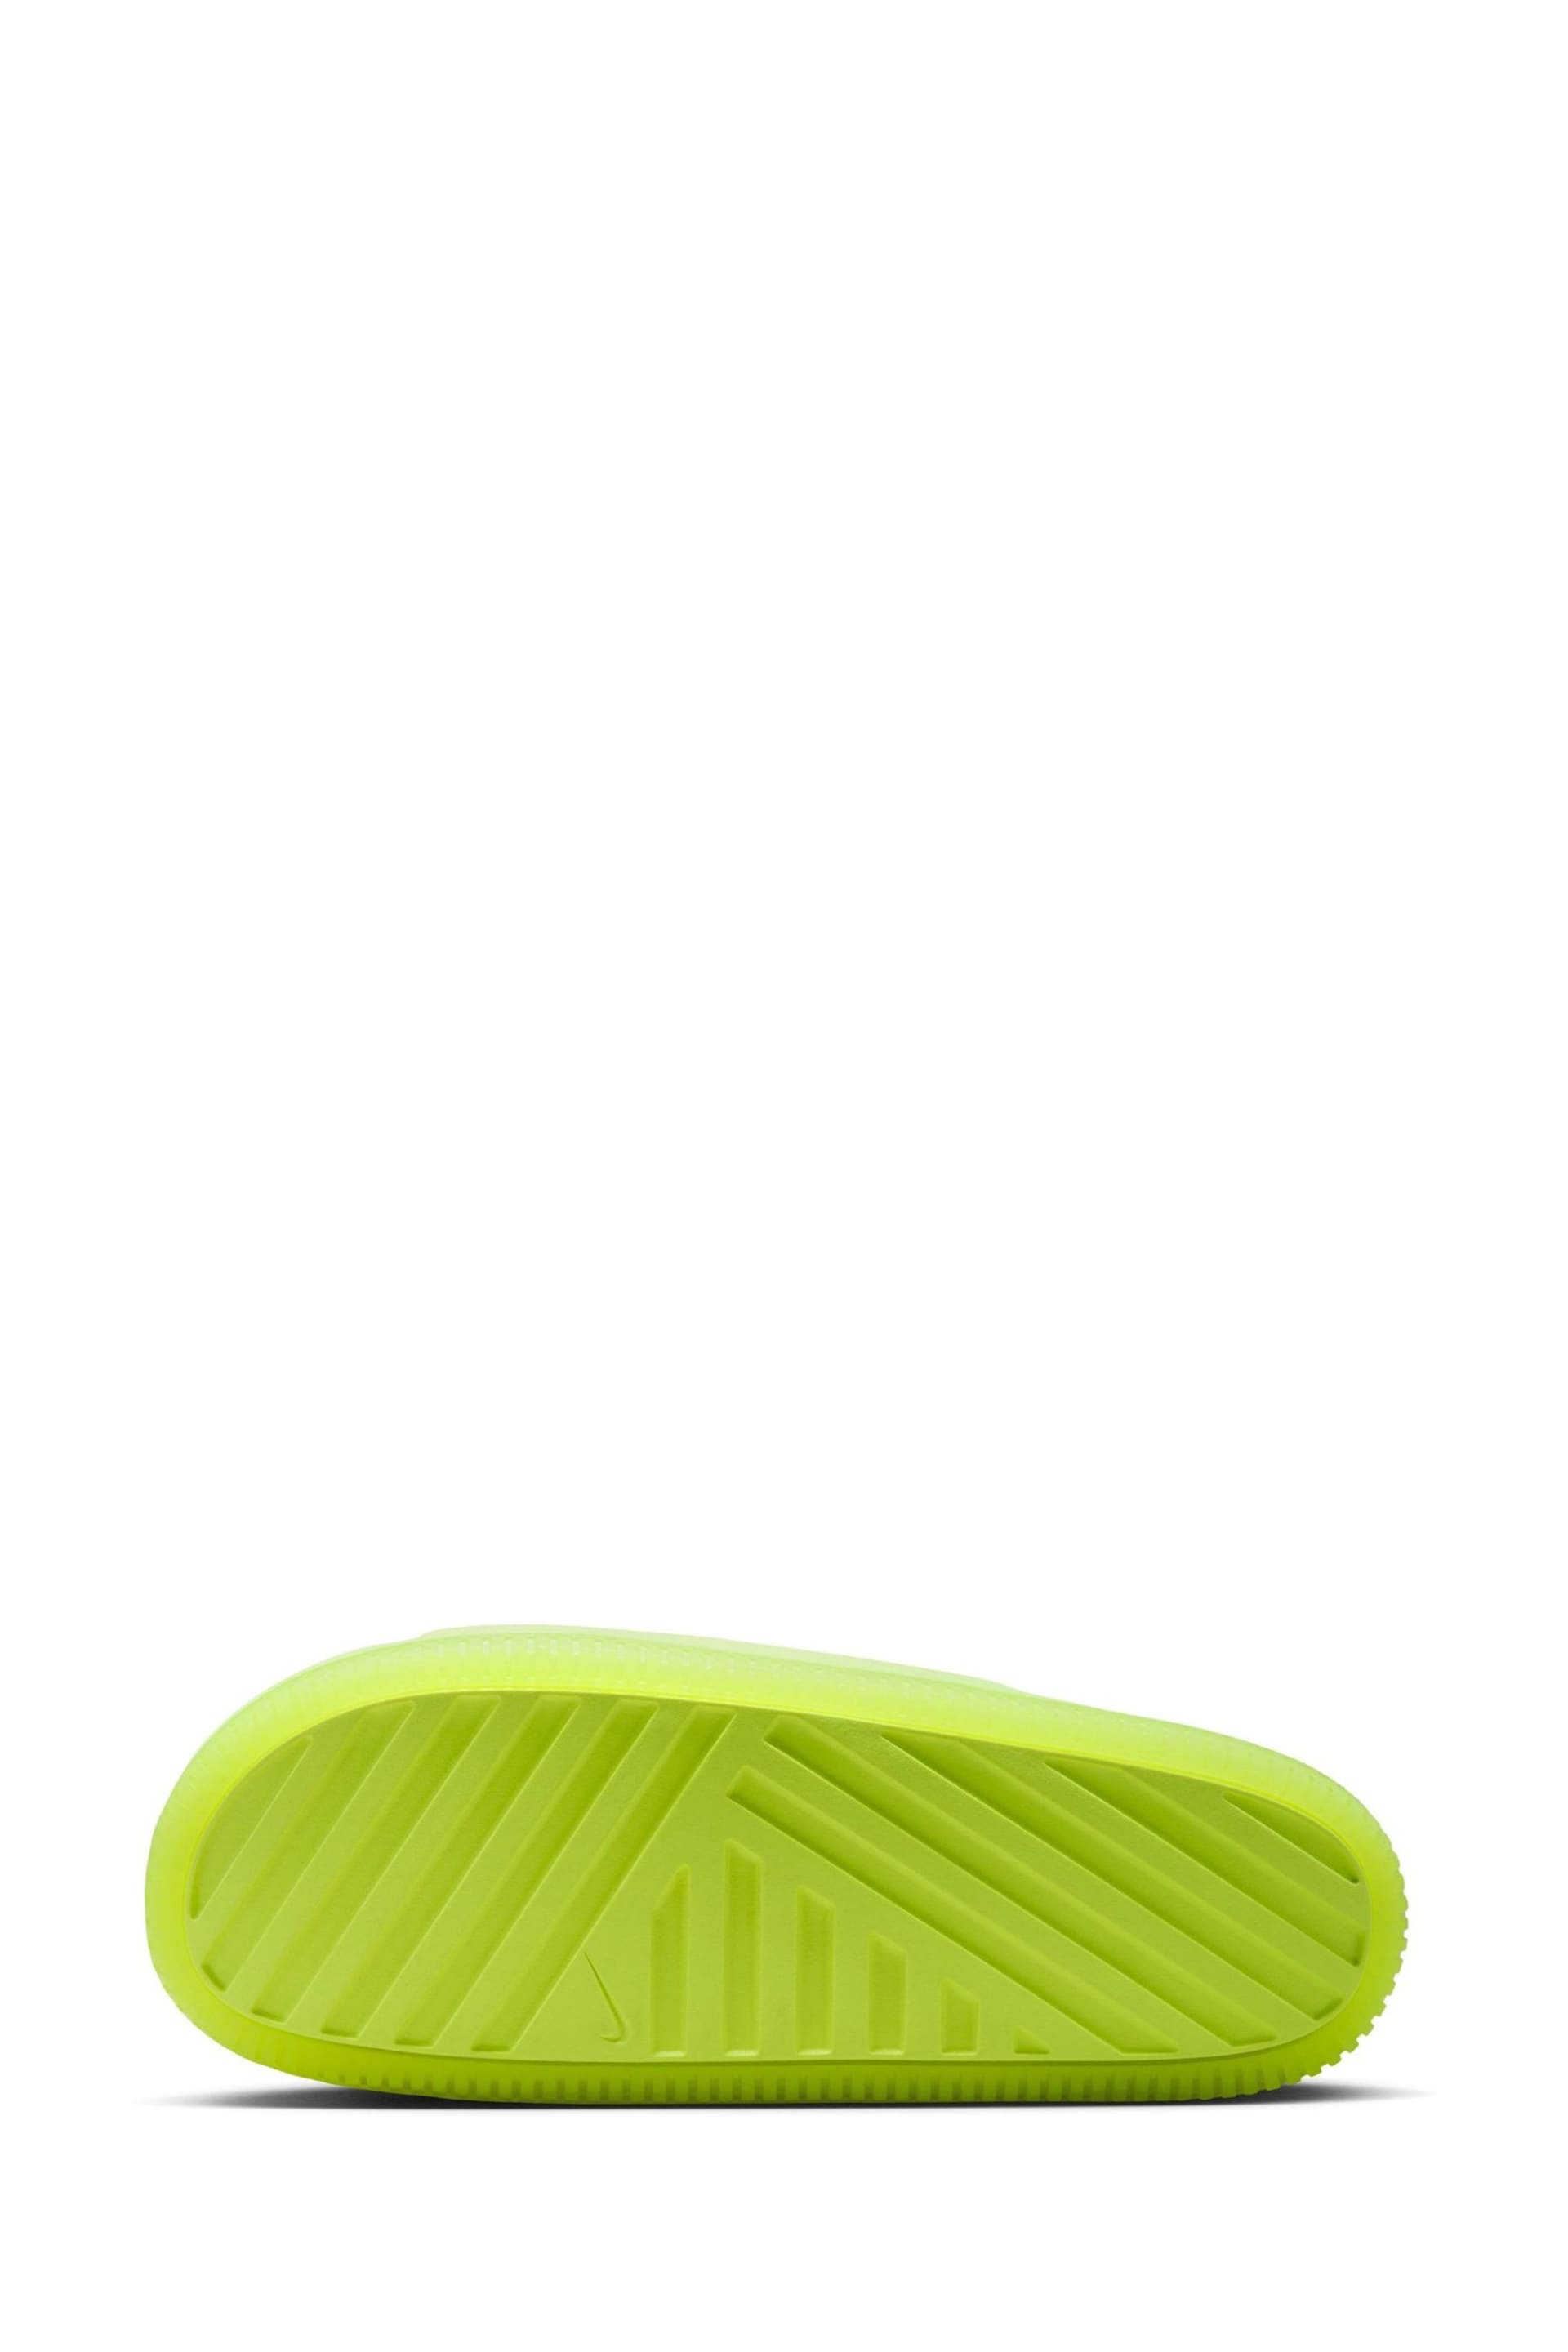 Nike Yellow Calm Slides - Image 7 of 10